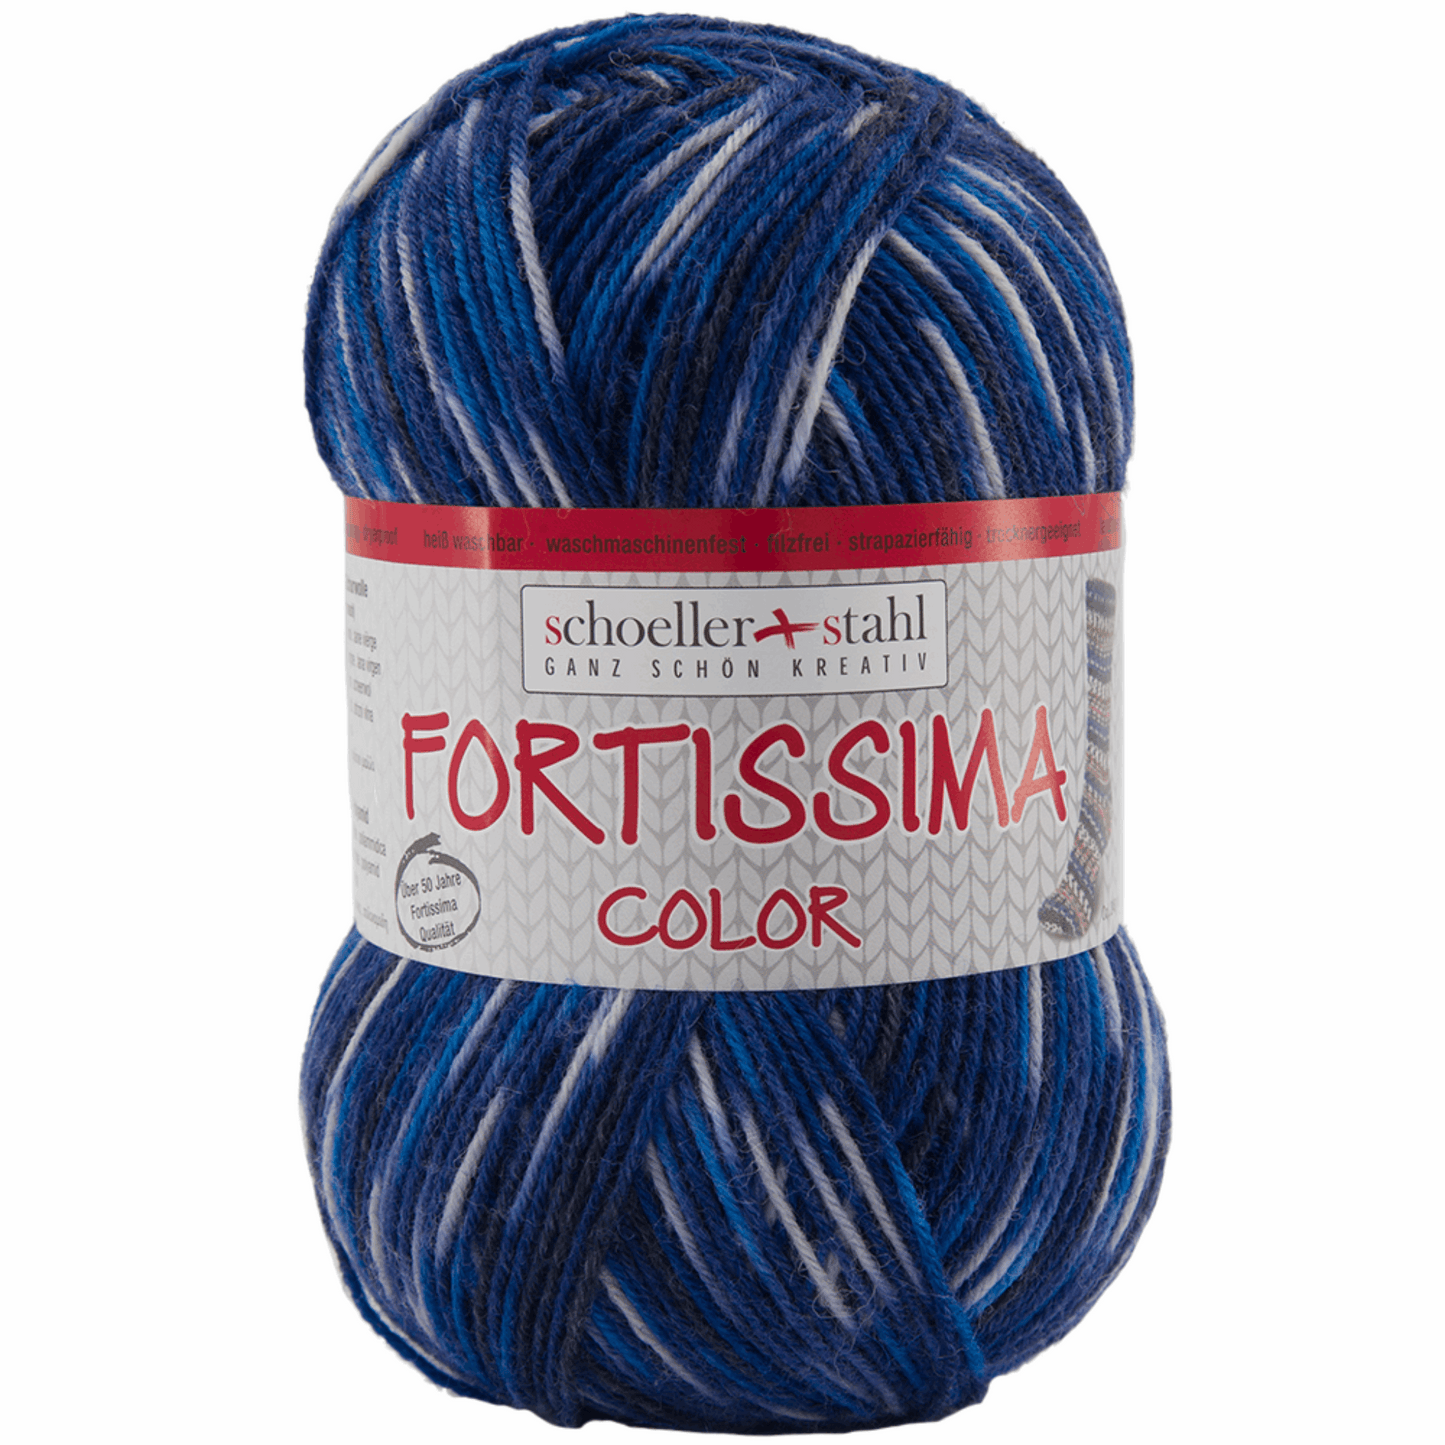 Fortissima socka 4-ply, 90028, color 2408, navy